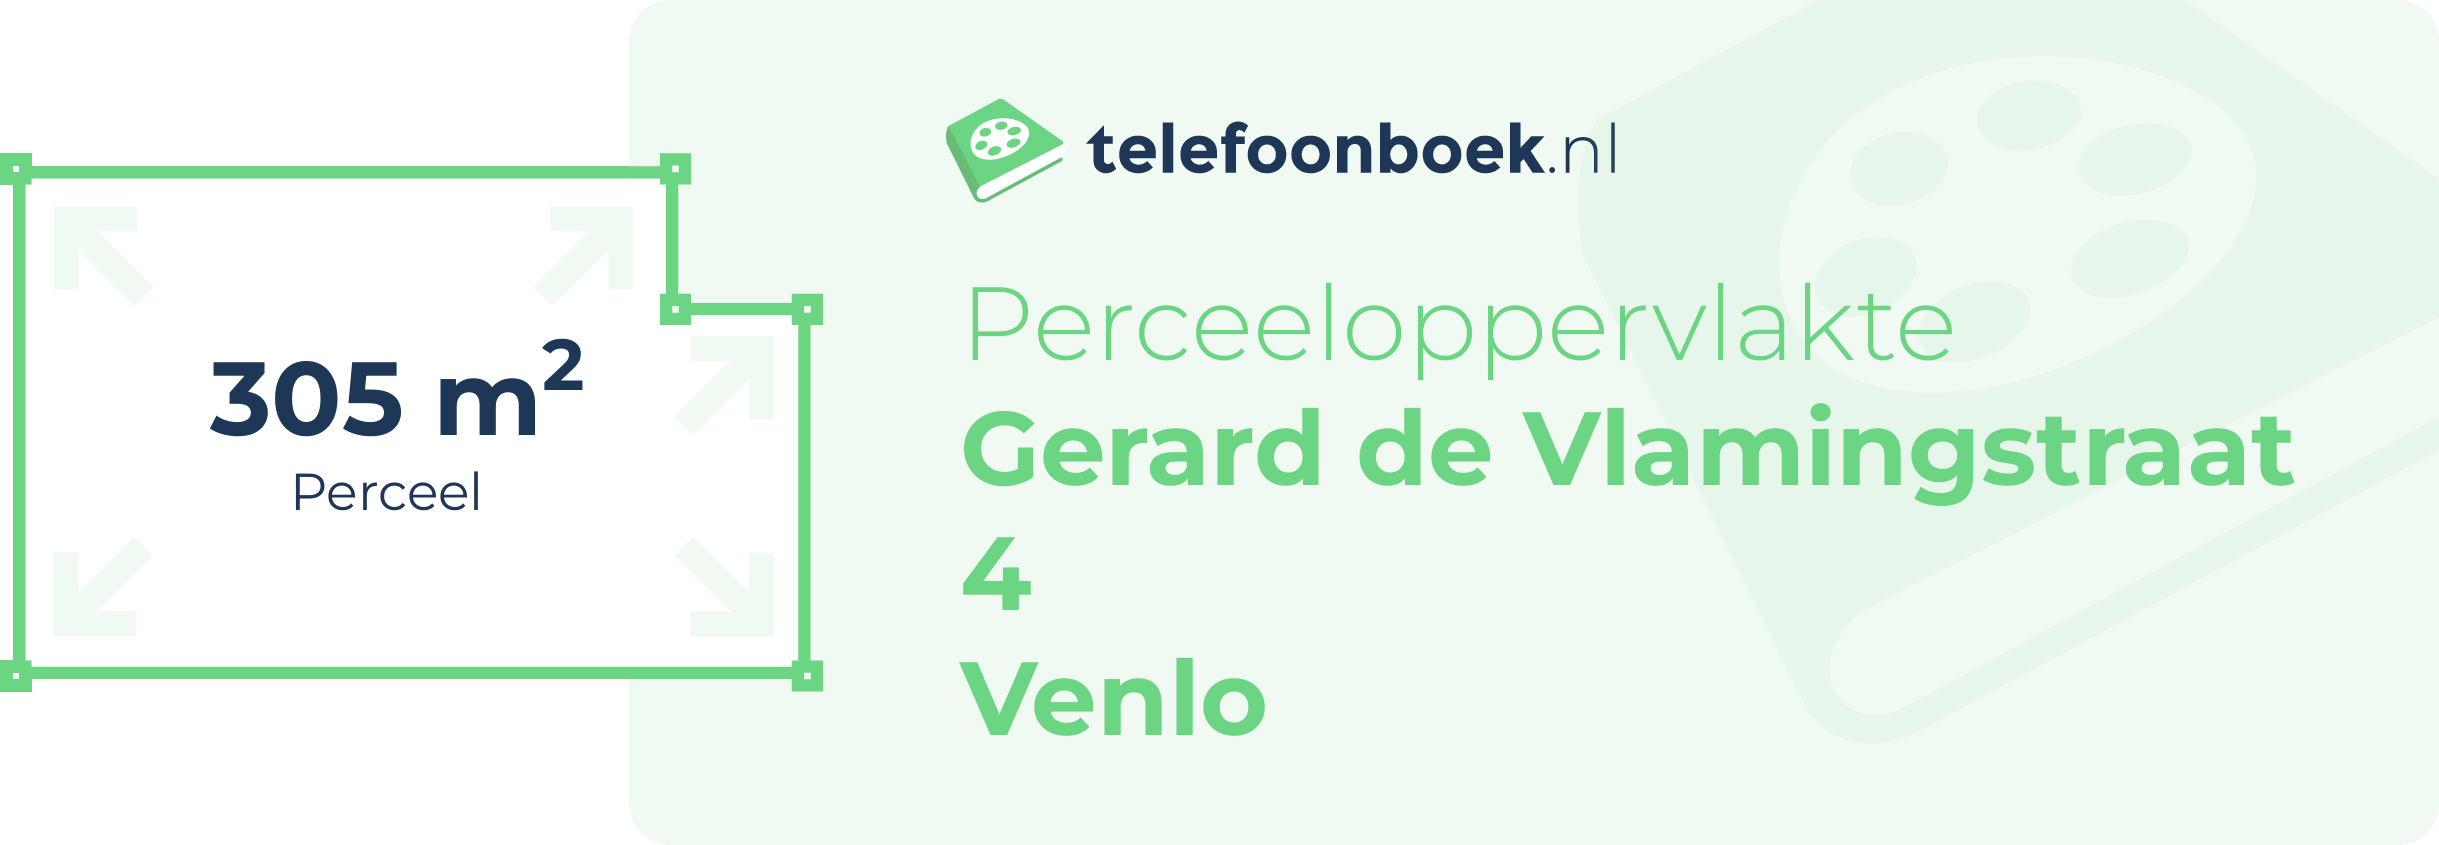 Perceeloppervlakte Gerard De Vlamingstraat 4 Venlo